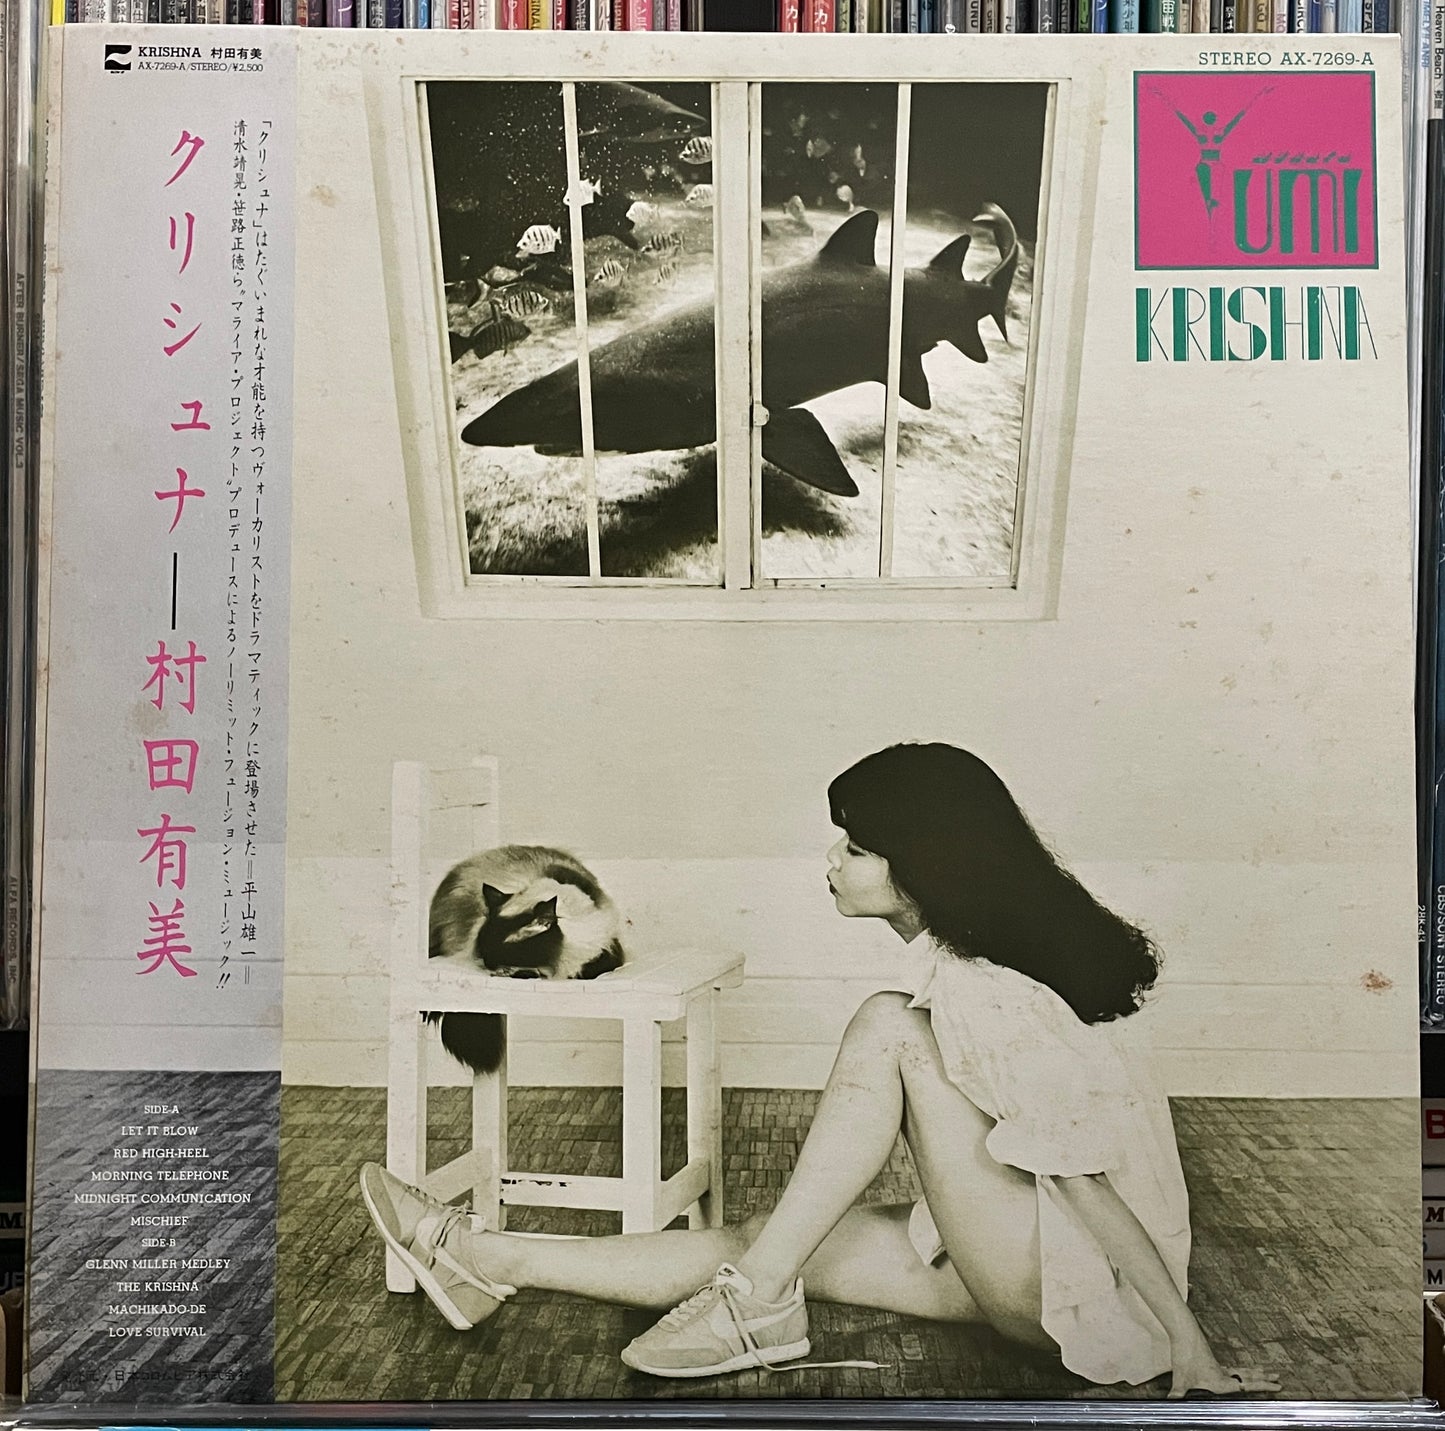 Yumi Murata “Krishna” (1980)